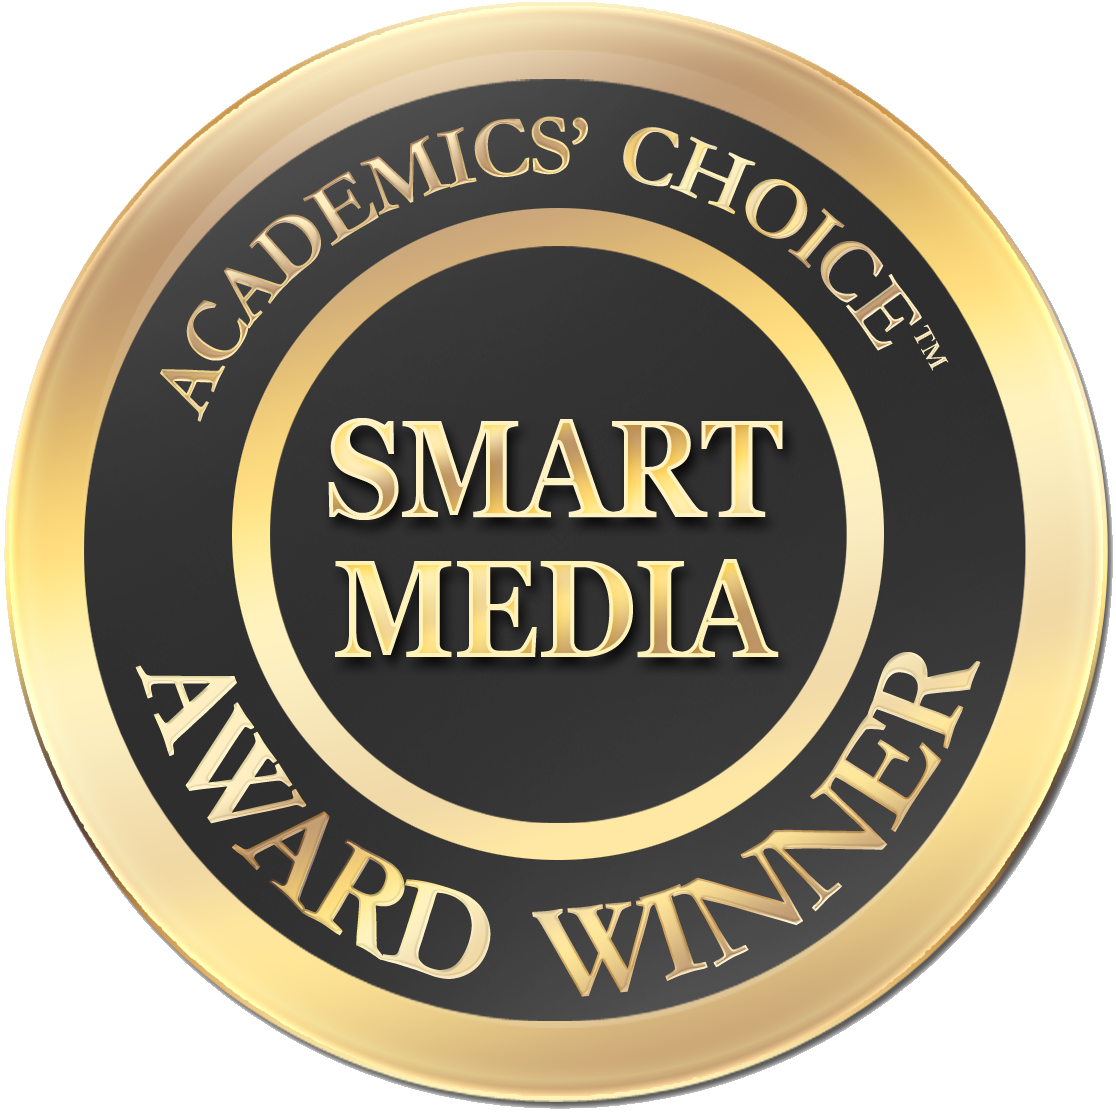 MobyMax Earns 2019 Academics’ Choice Smart Media Award for Mind